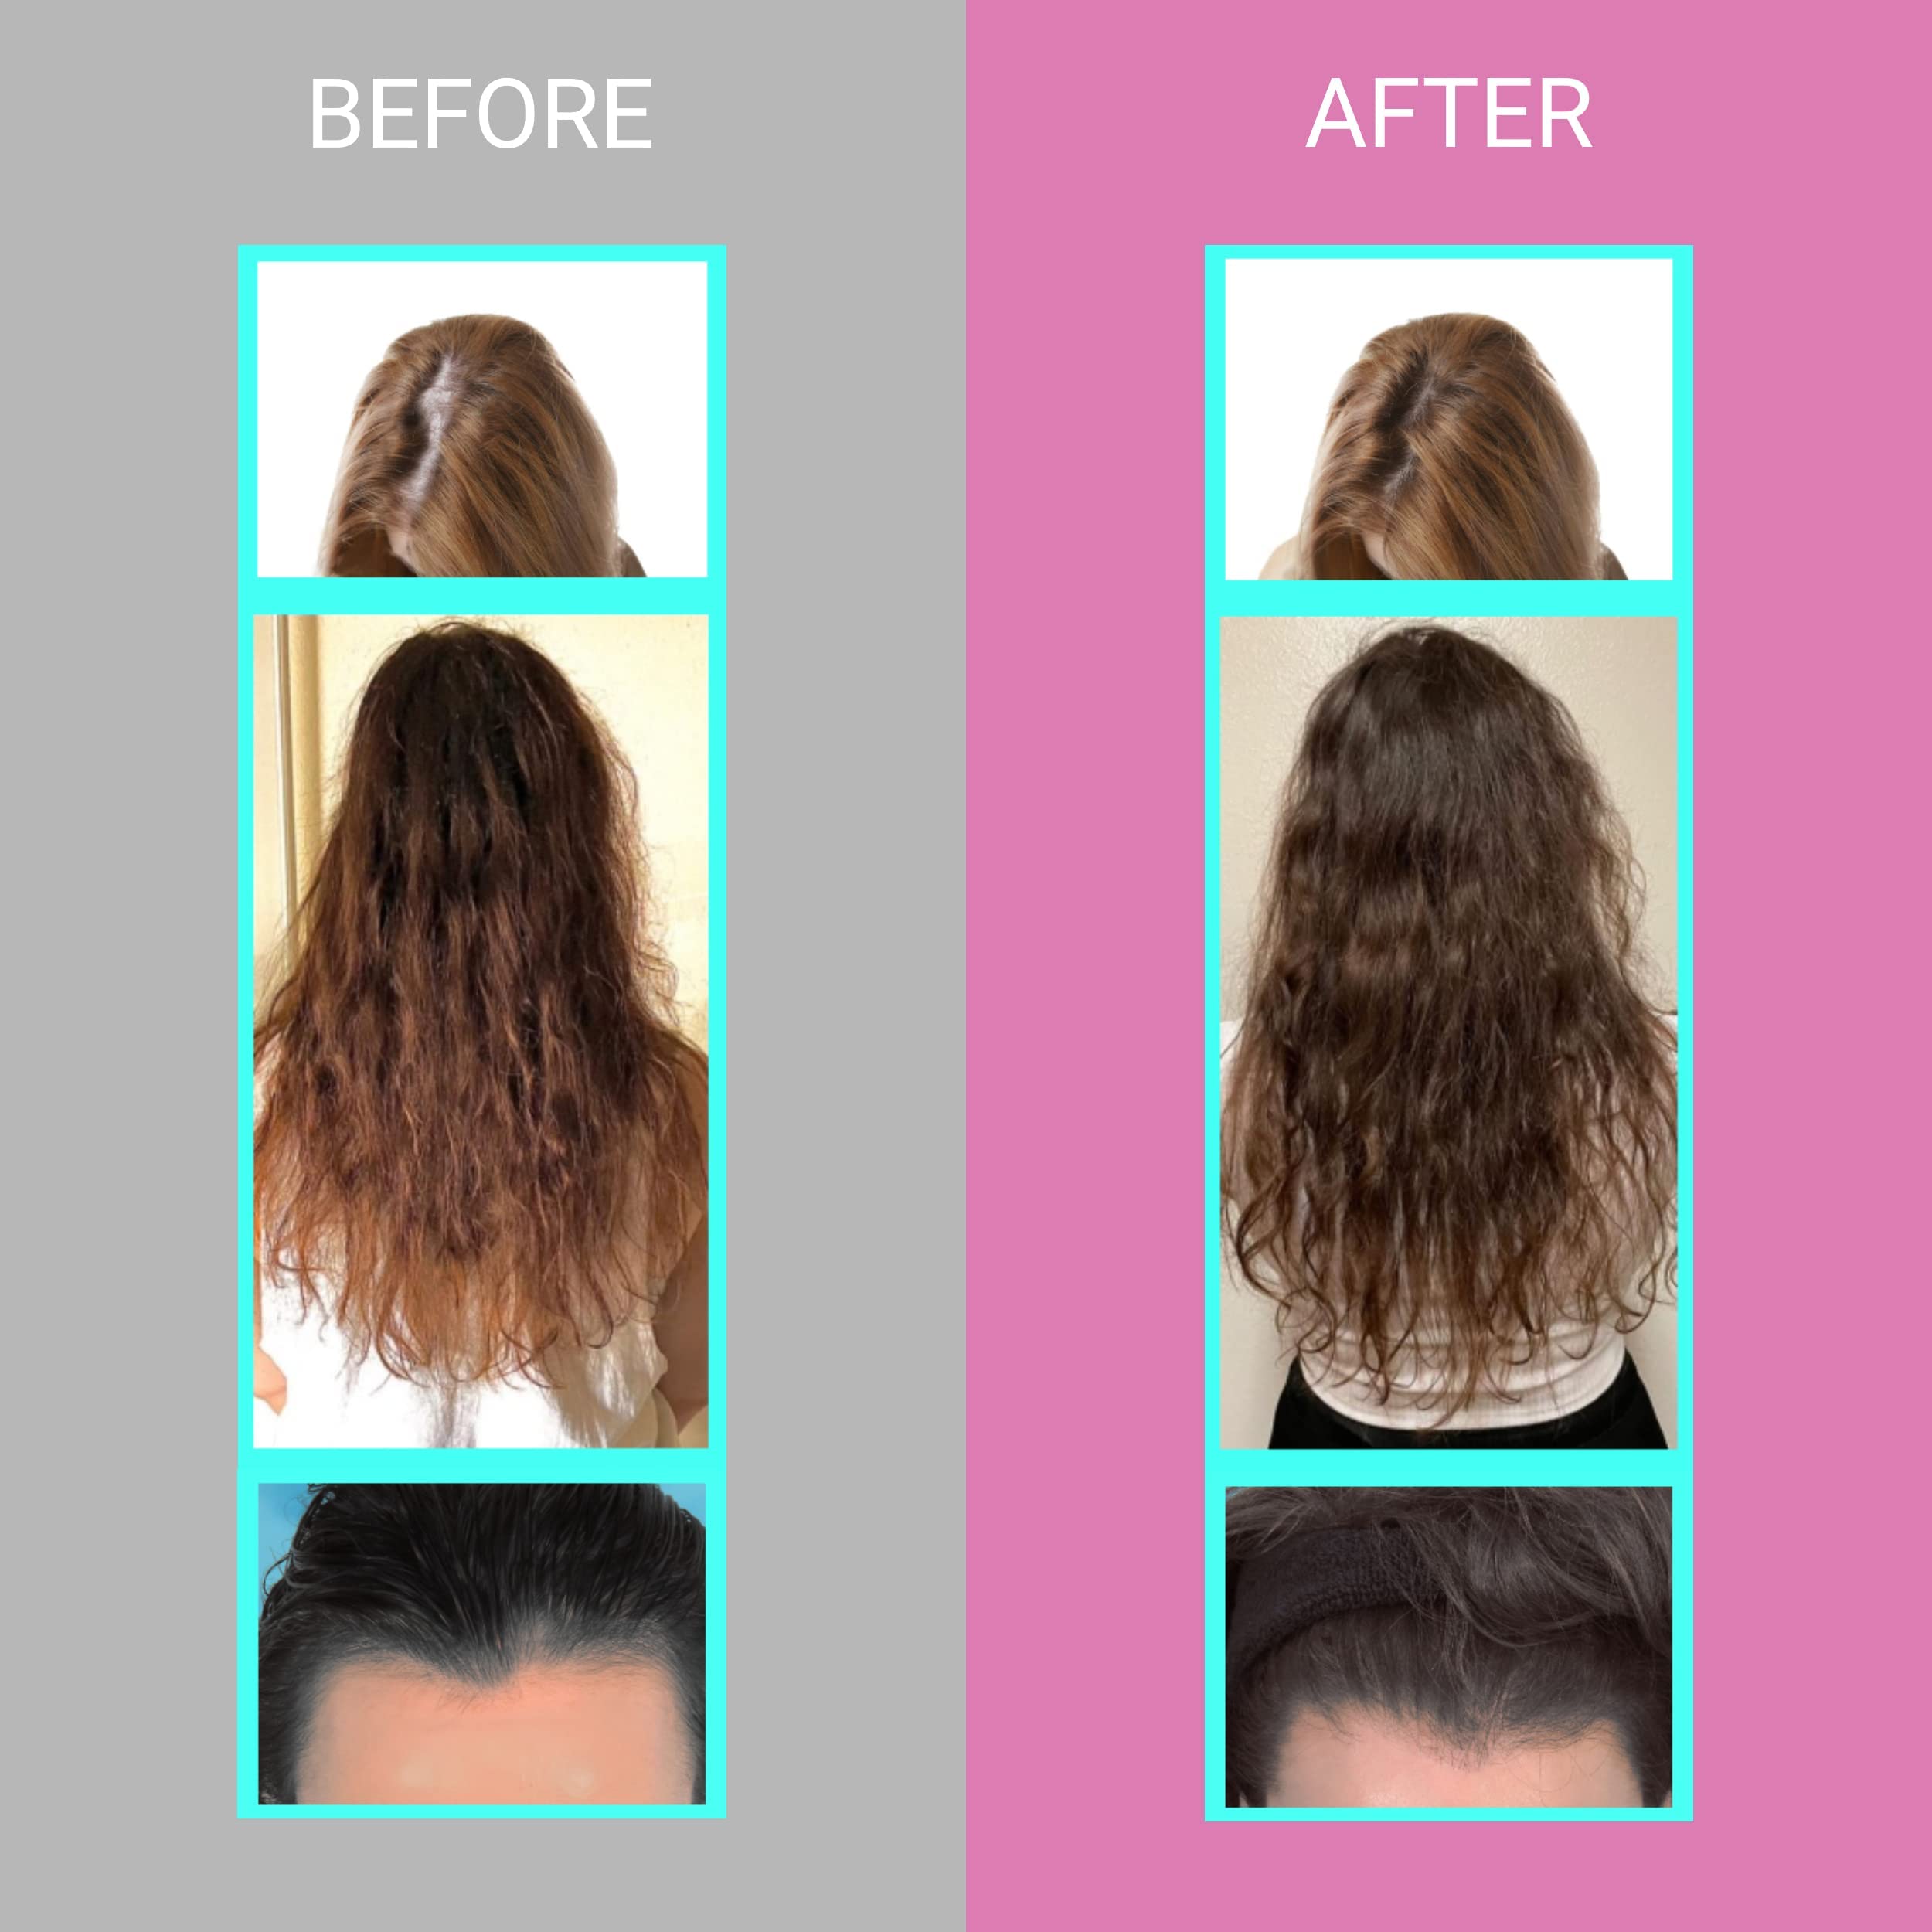 Mua Hair Growth Vitamins for Women - Proven Hair Supplement with KERANAT,  DHT Blocker PHYTOPIN, Biotin 5000 mcg & SOD, - Hair Vitamins for Faster  Hair Growth, Hair Loss & Thinning Hair -